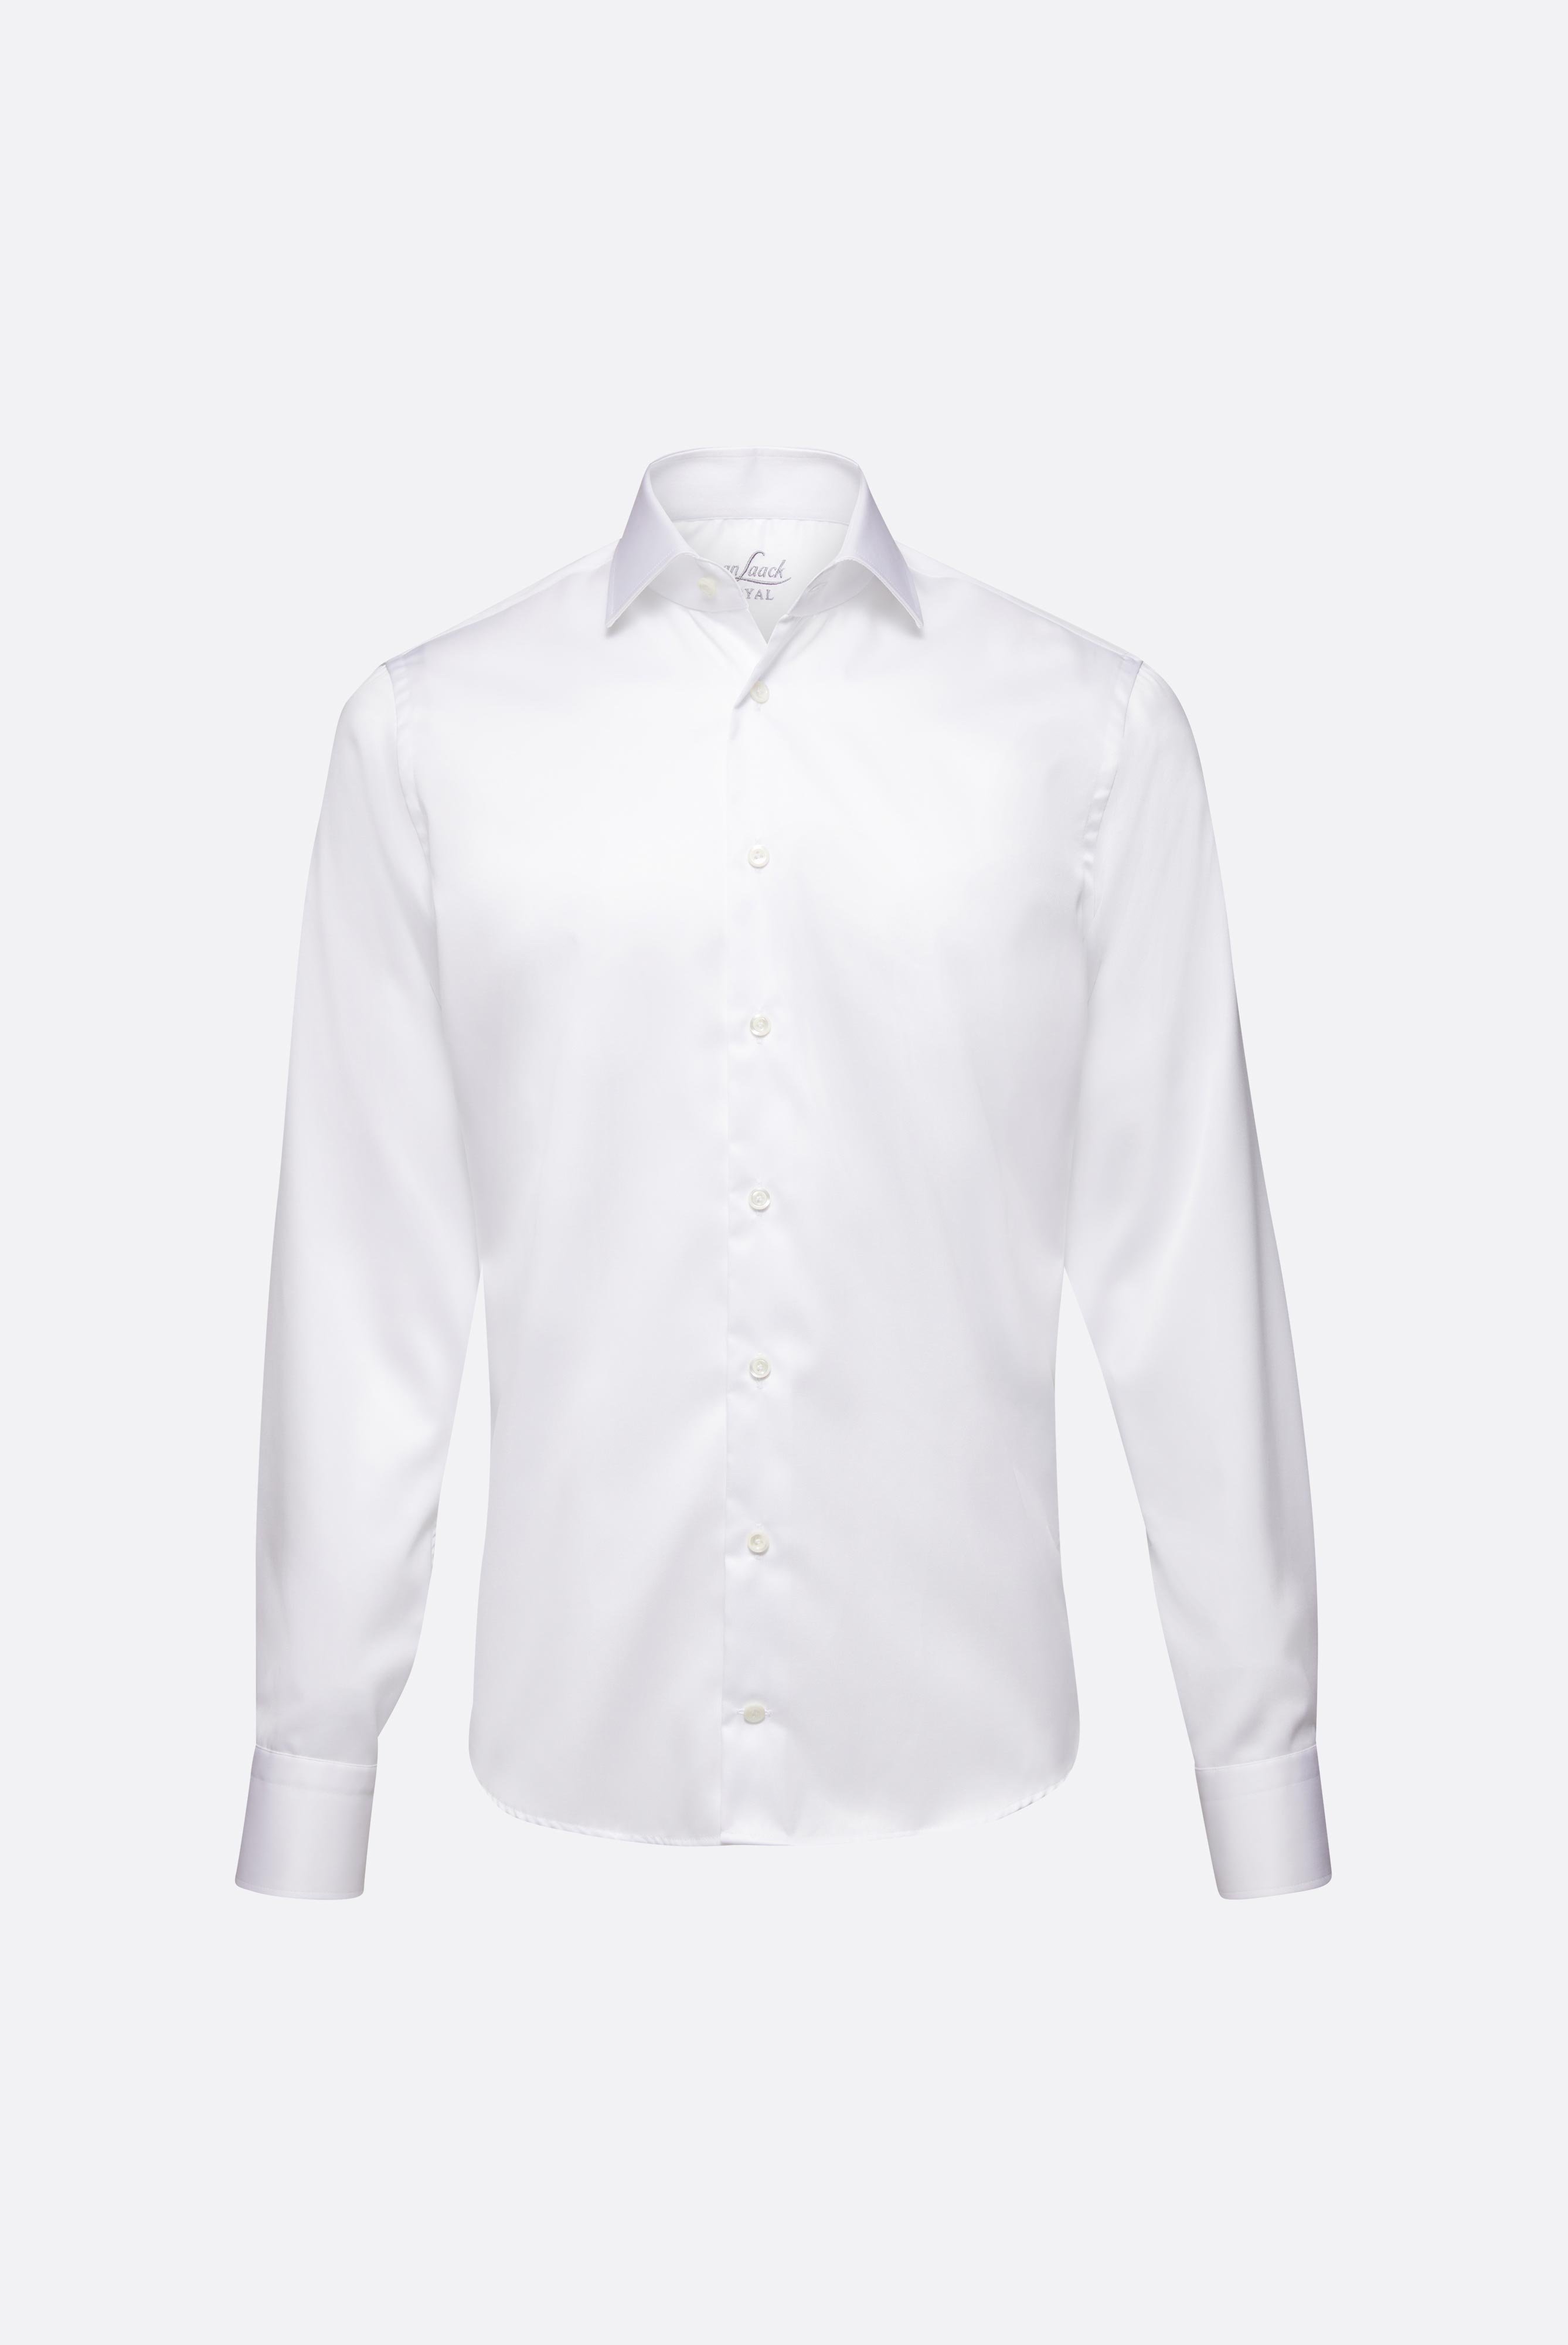 Bügelleichte Hemden+Bügelfreies Twill Hemd Tailor Fit+35.3012.BN.133342.000.38